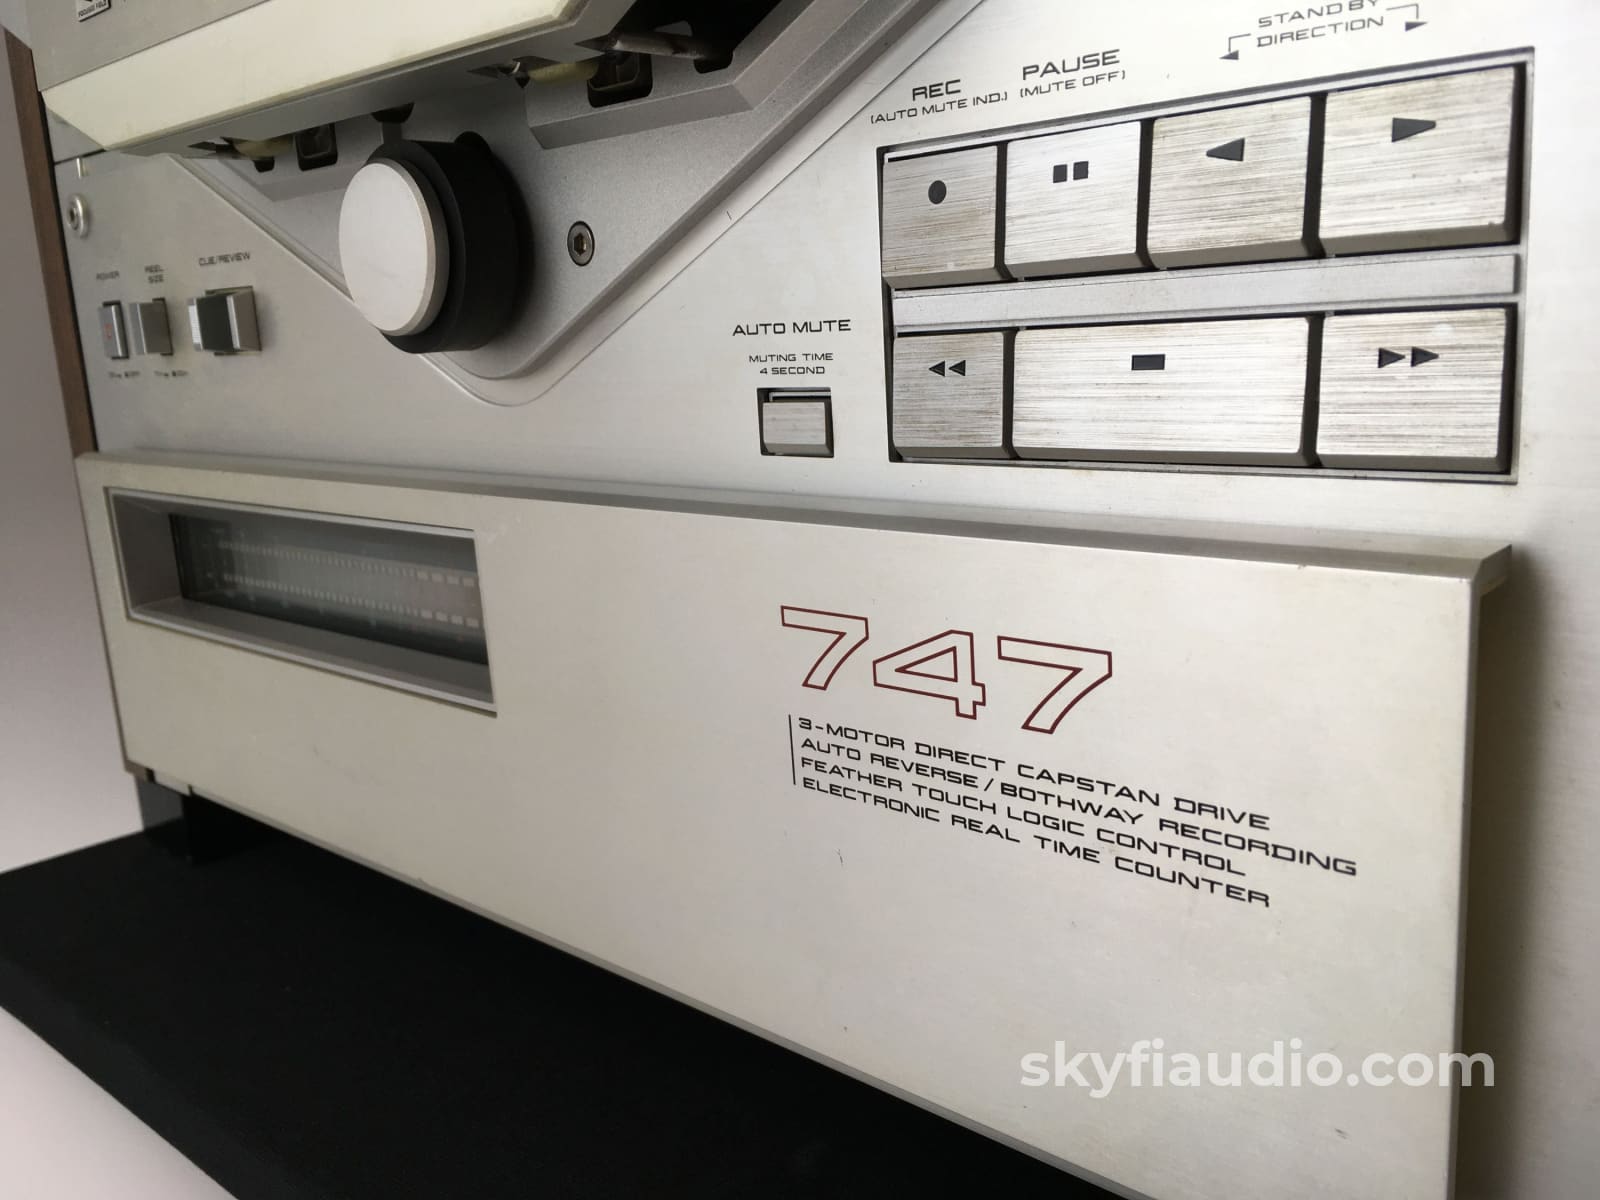 Akai Gx-747 Professional Stereo Reel To Tape Recorder Deck